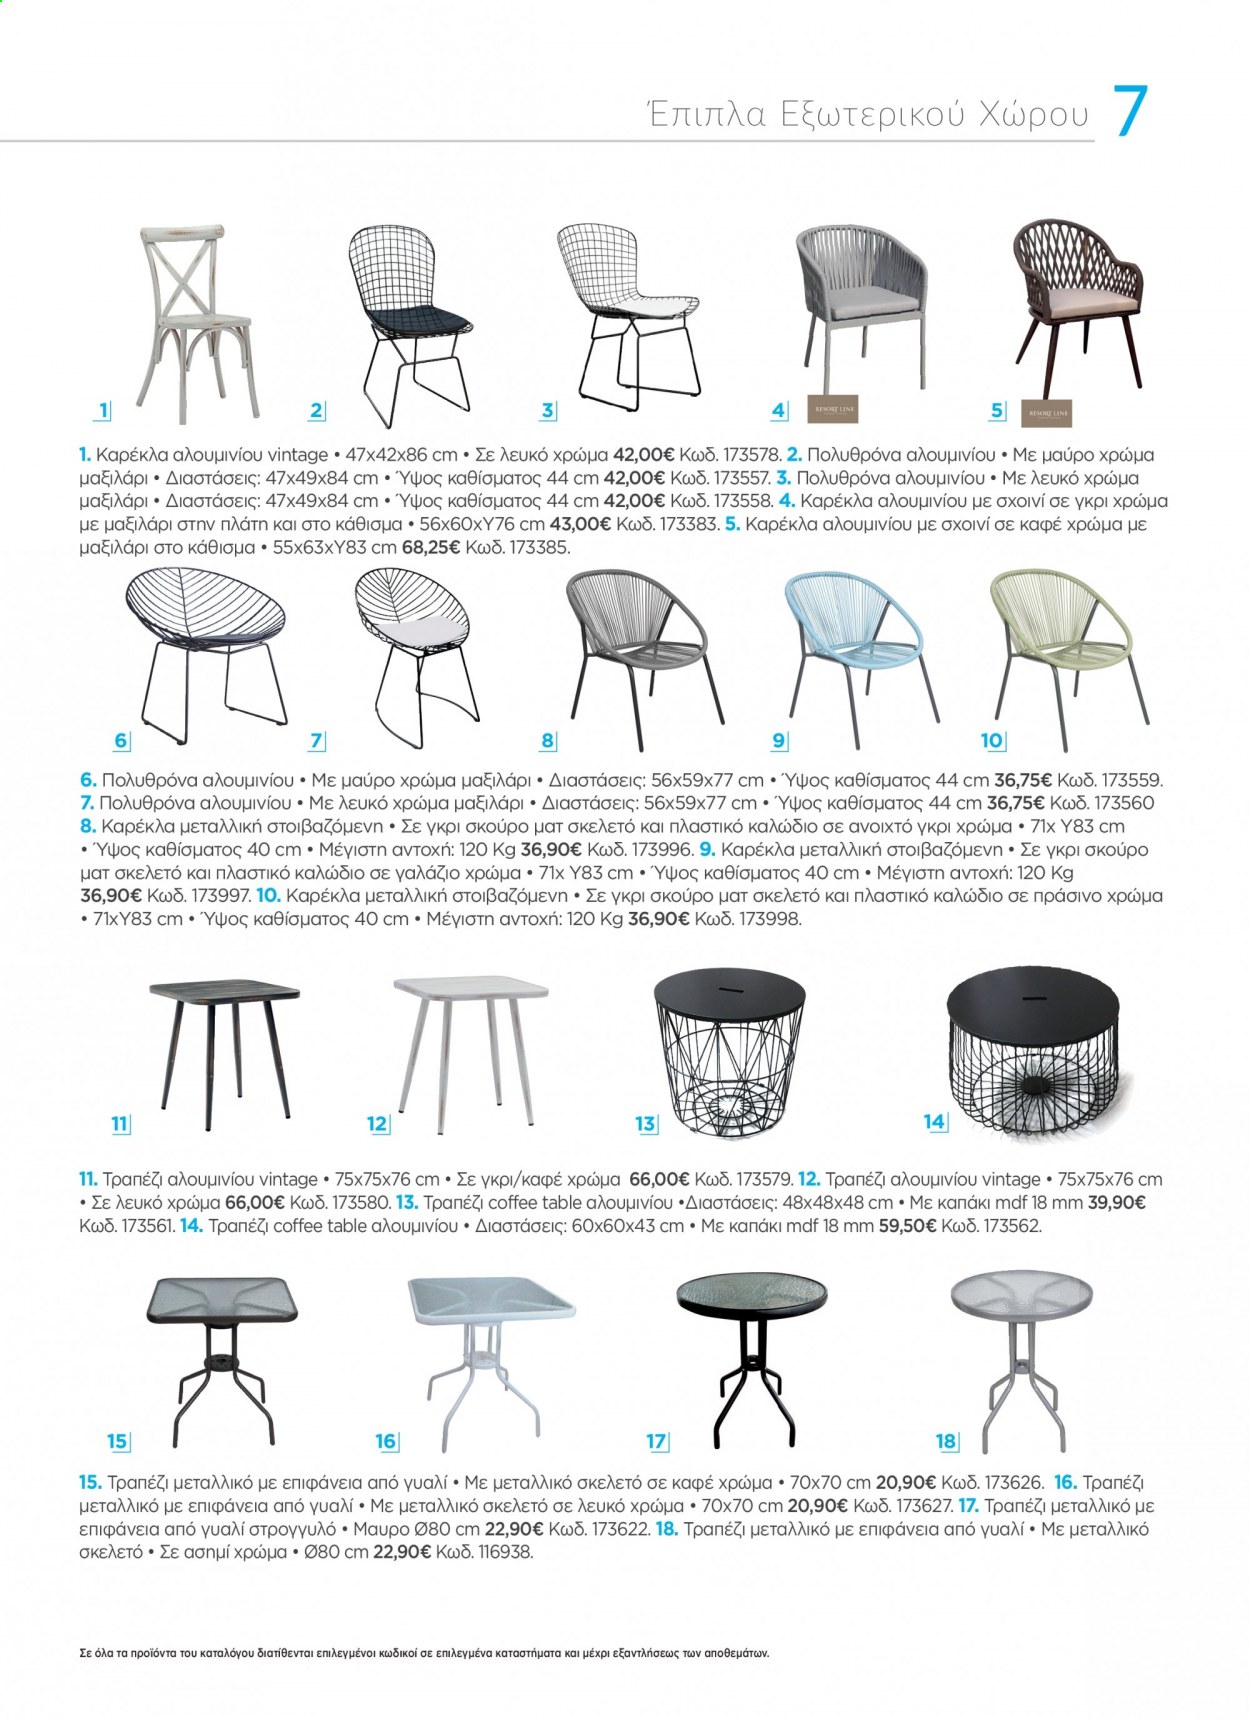 thumbnail - Φυλλάδια The Mart - 19.04.2021 - 31.08.2021 - Εκπτωτικά προϊόντα - τραπέζι, καρέκλα, καπάκι, μαξιλάρι, έπιπλα εξωτερικου χωρου. Σελίδα 7.